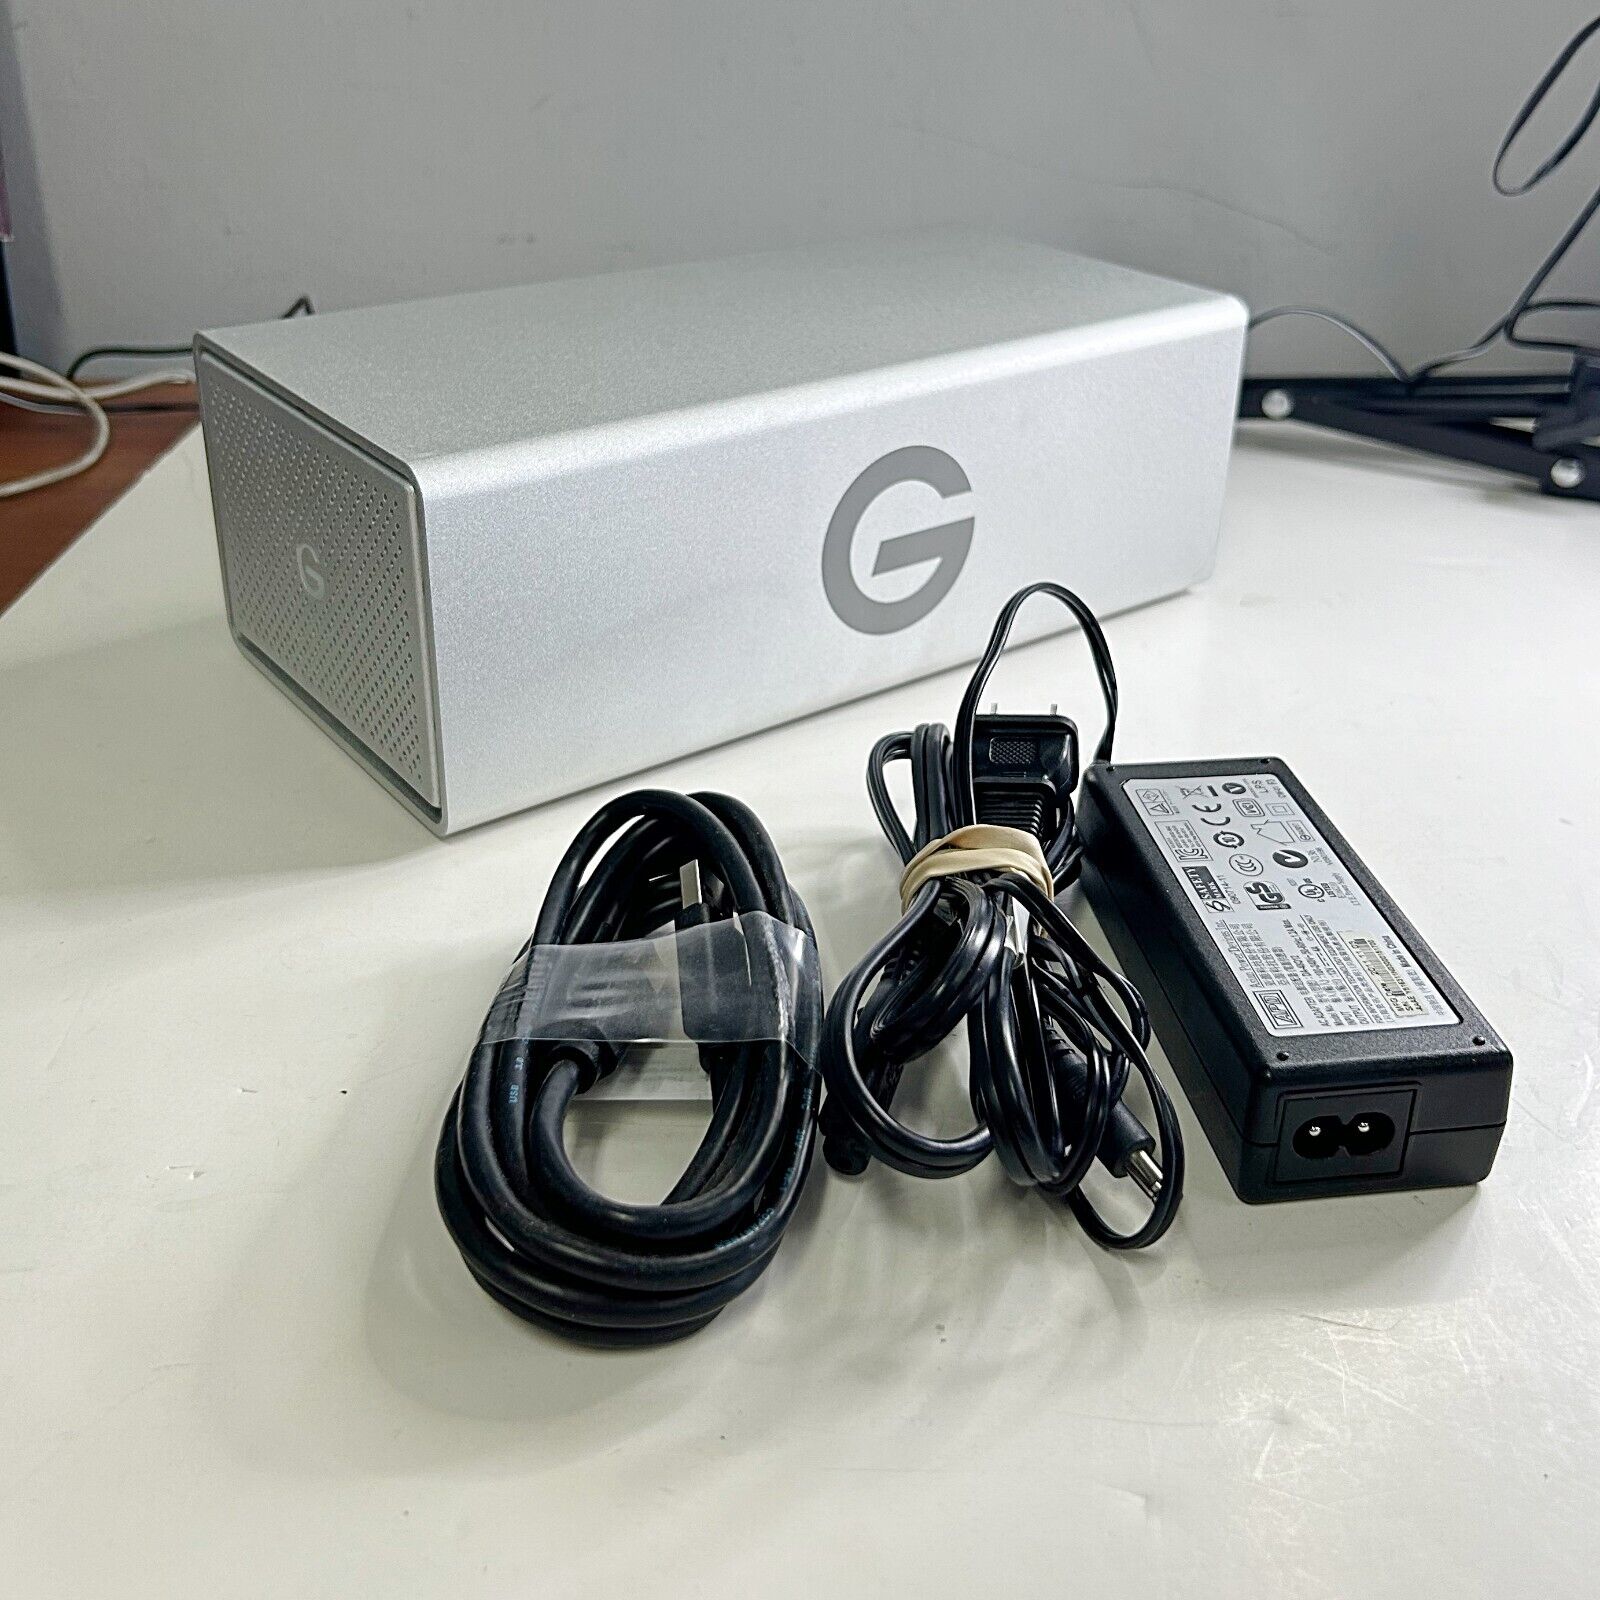 G-Technology G-Raid 8TB External Hard Drive 0G03244 USB 3.0